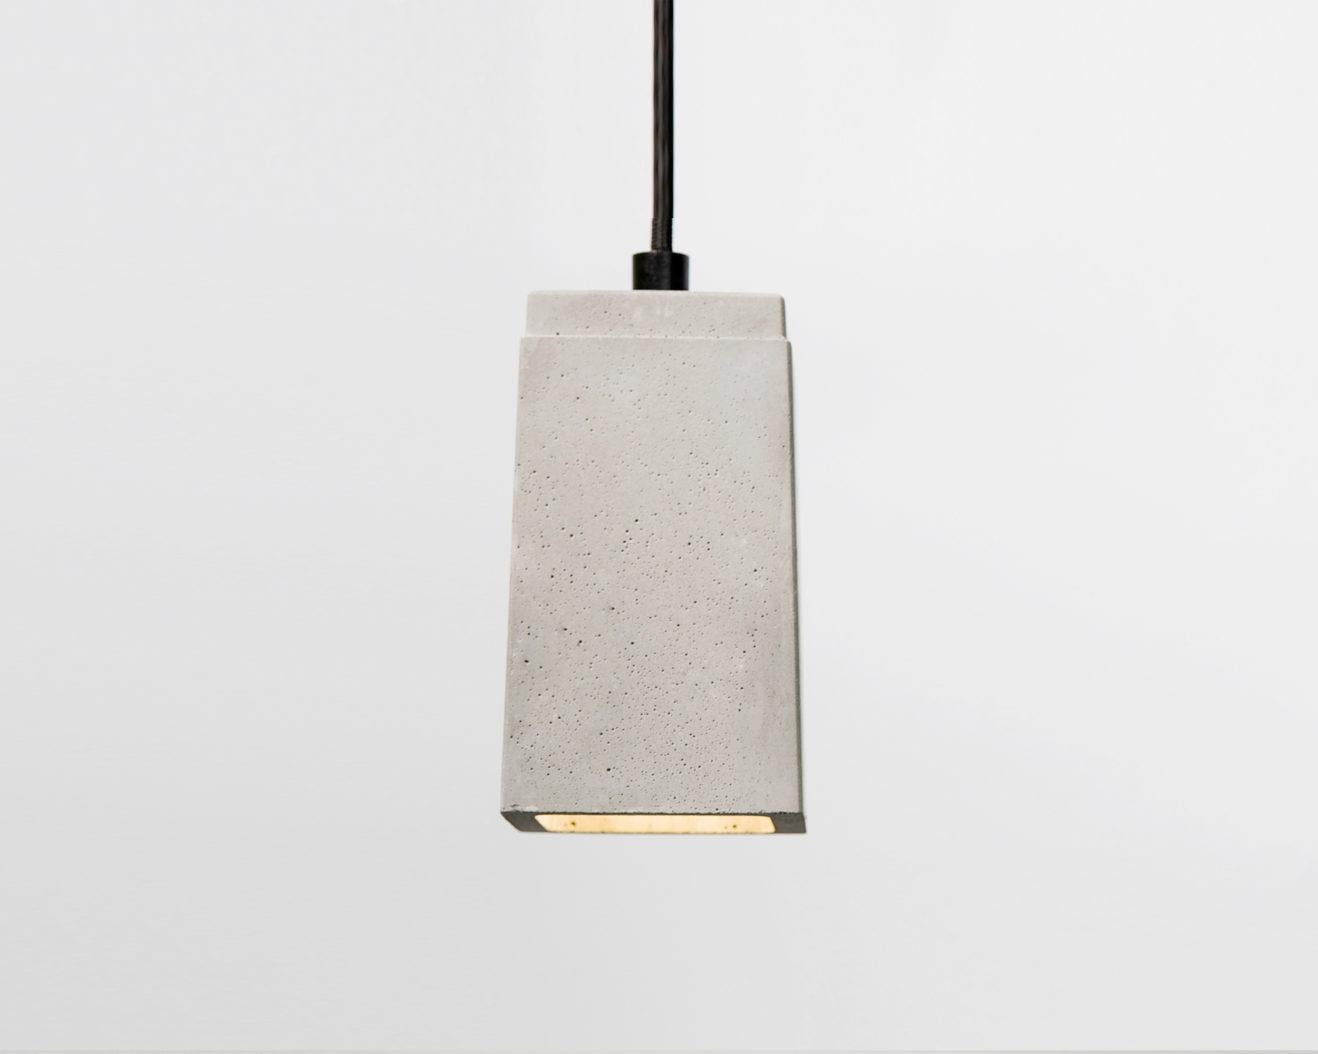 Chinese Zero, Concrete Ceiling Lamp by Bentu Design